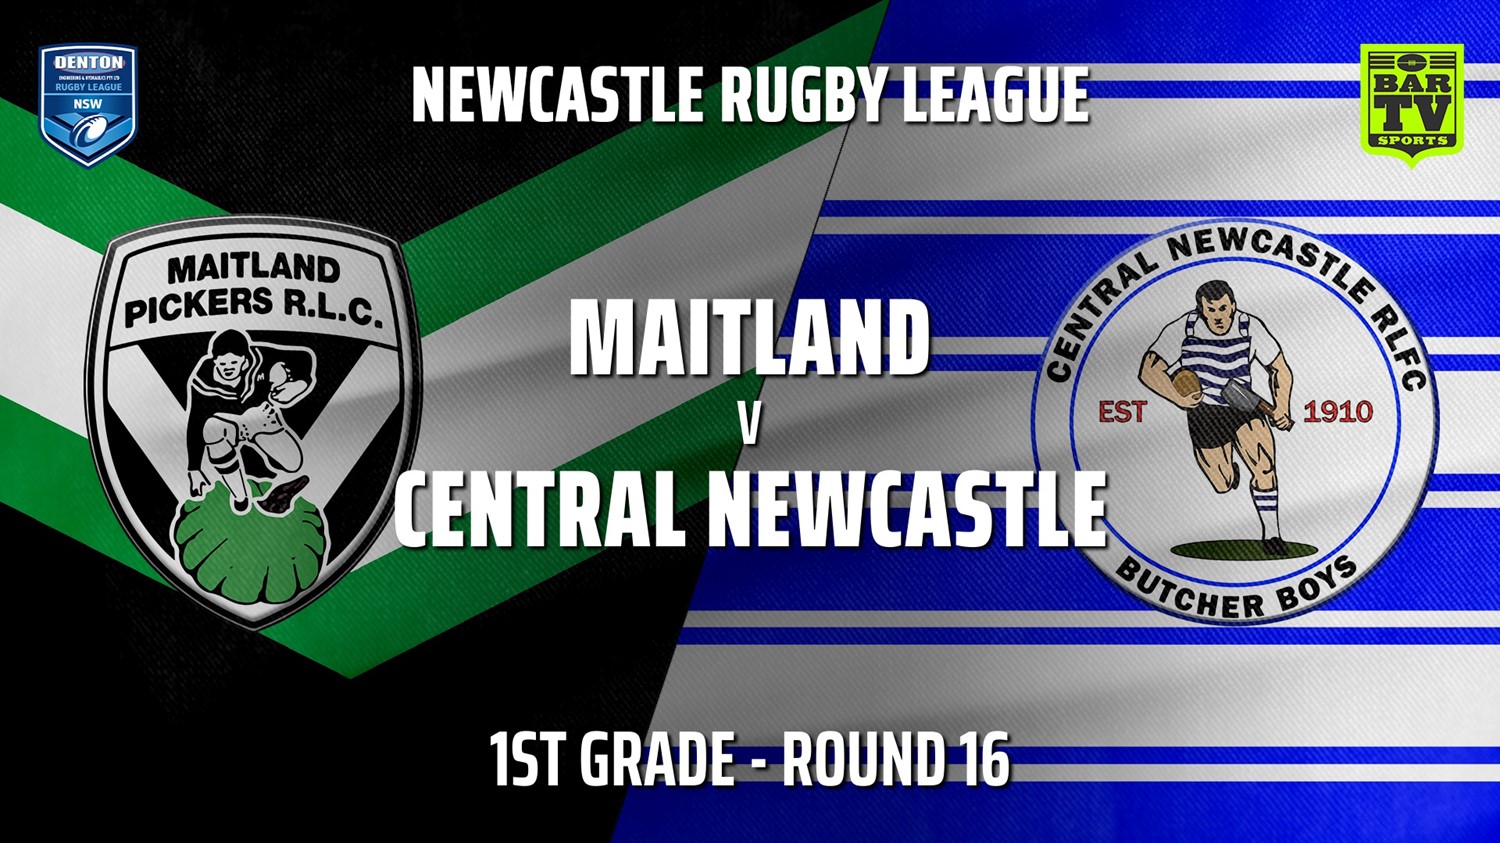 210724-Newcastle Round 16 - 1st Grade - Maitland Pickers v Central Newcastle Slate Image